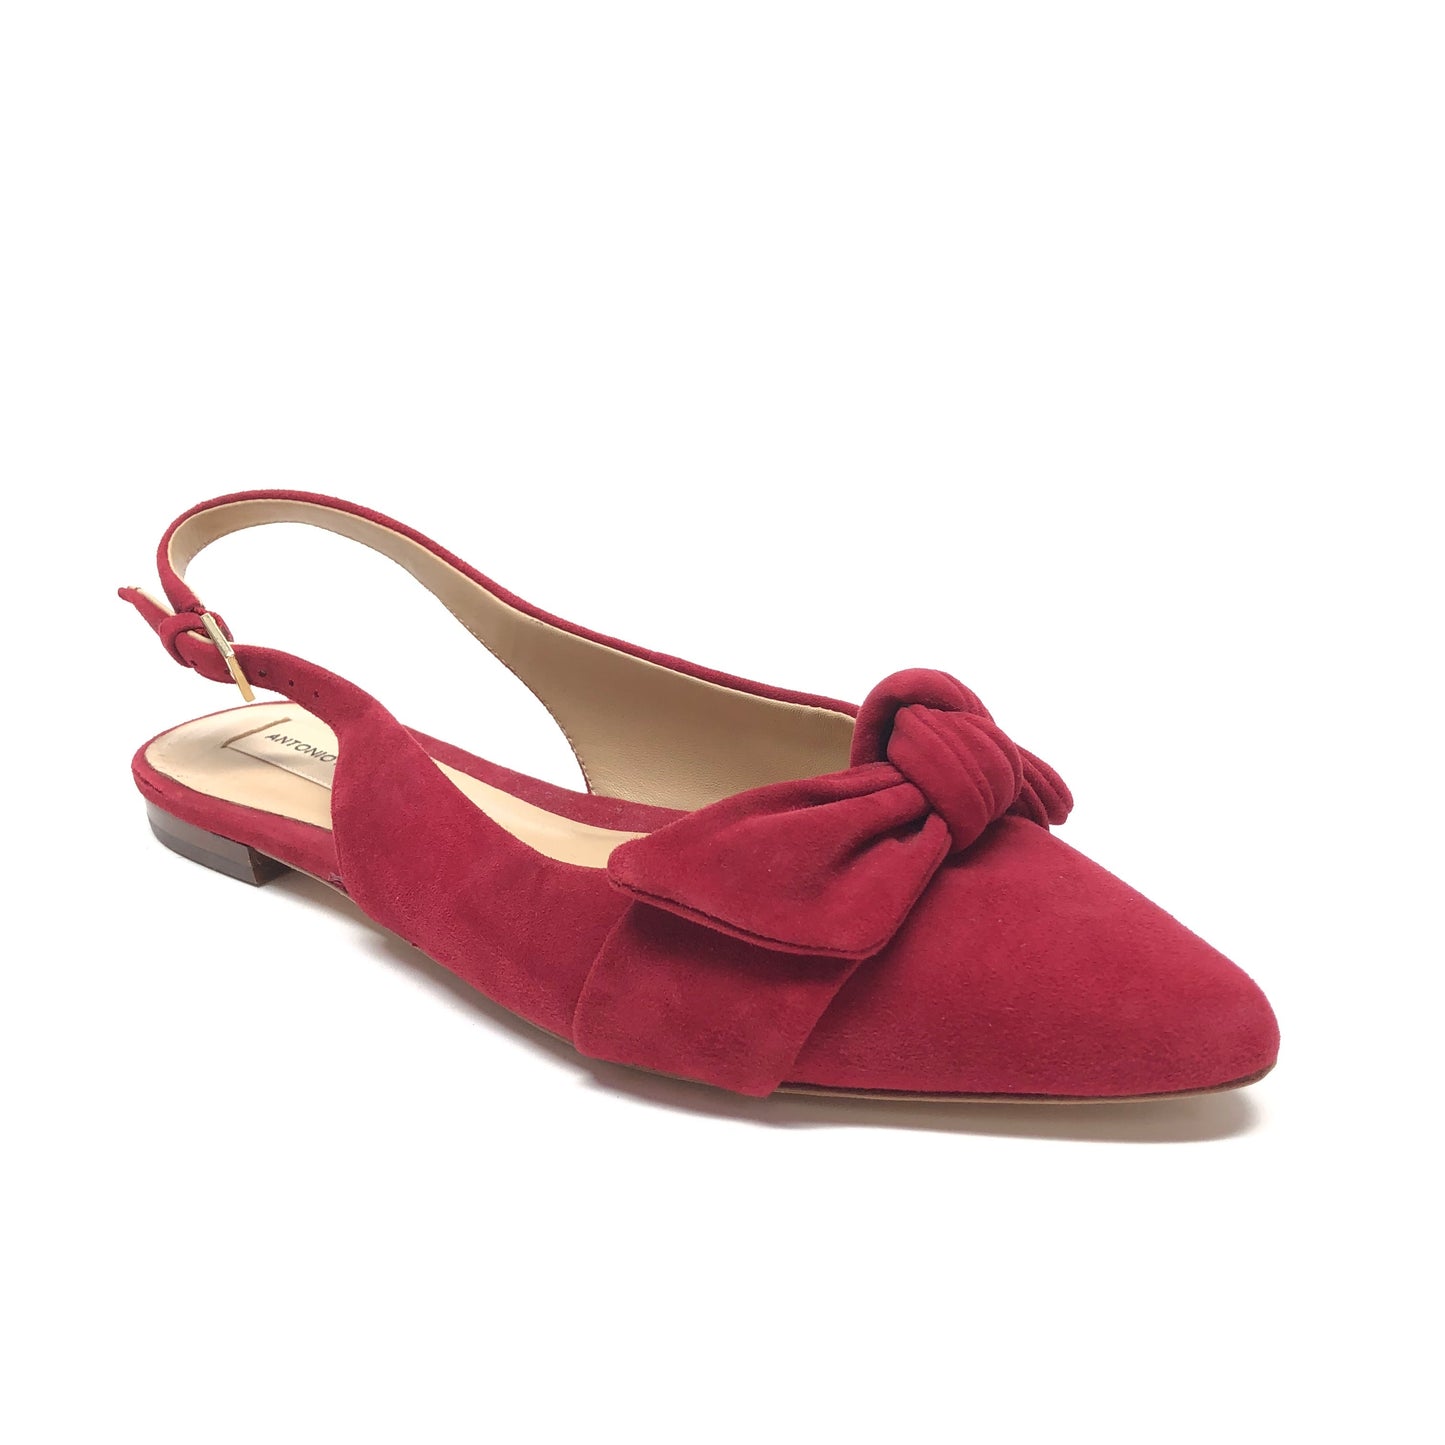 Red Shoes Flats Antonio Melani, Size 8